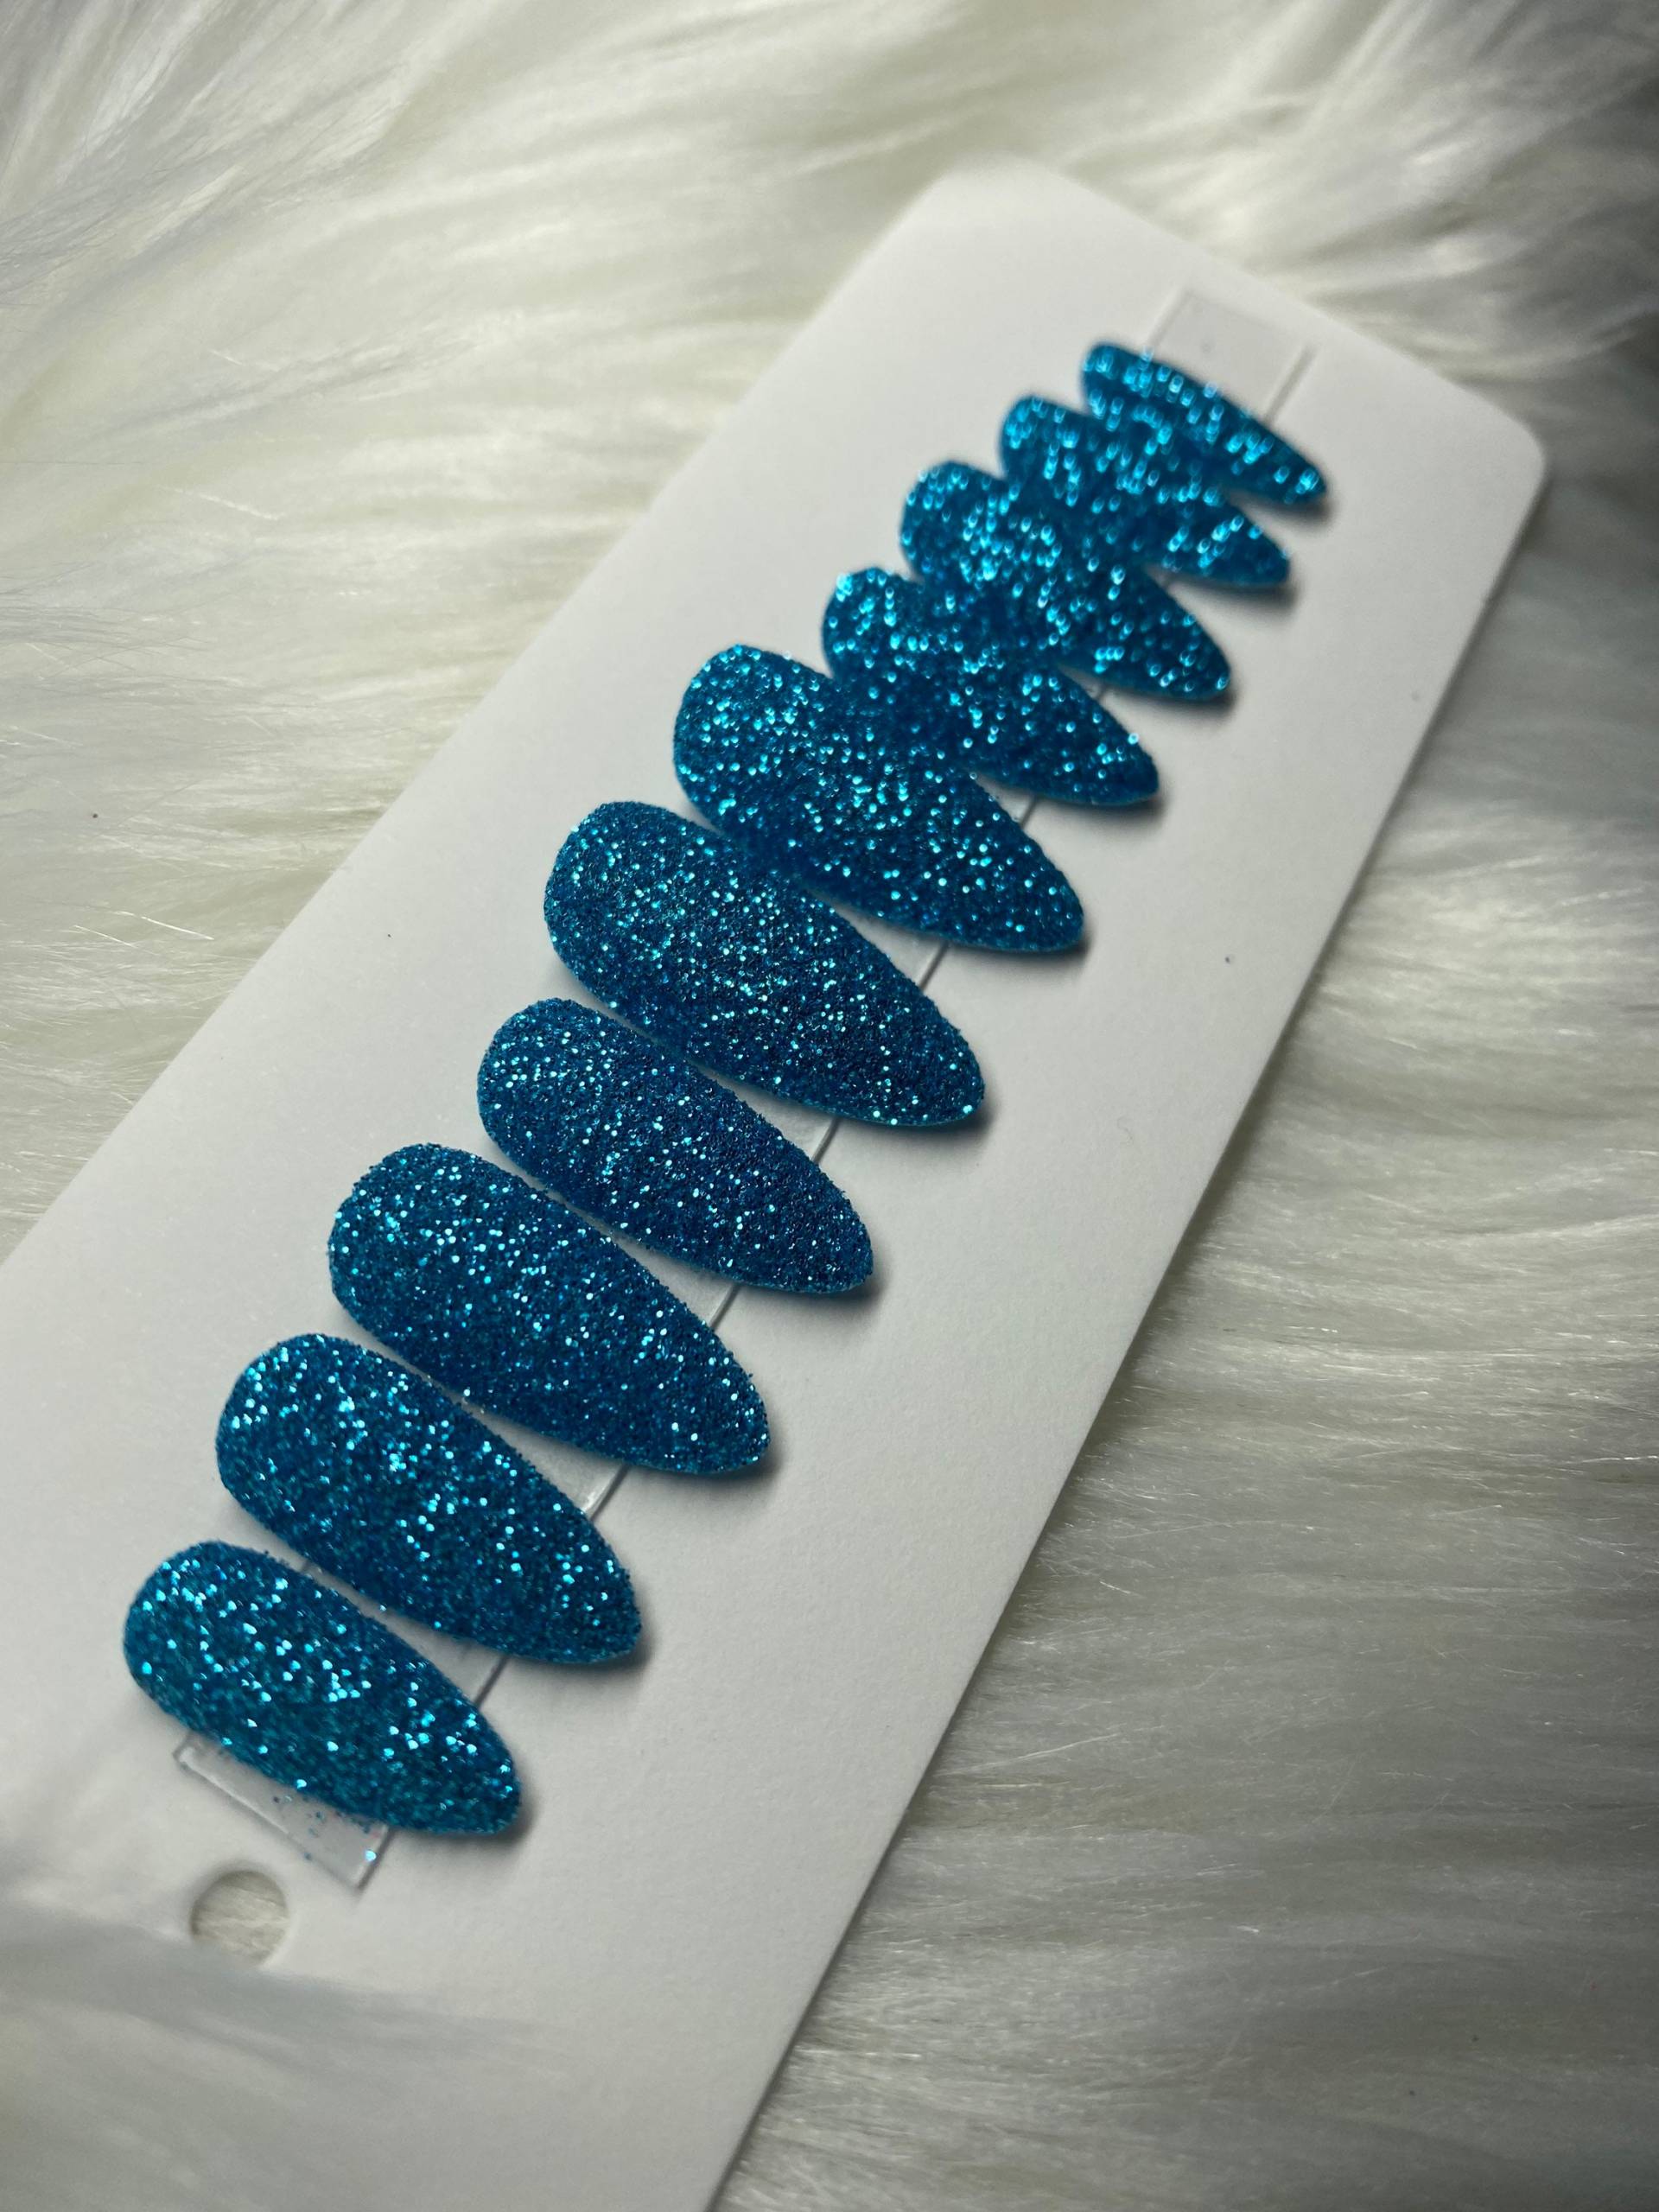 Aqua Blue Glitter Press On Nails von Dianailstudio